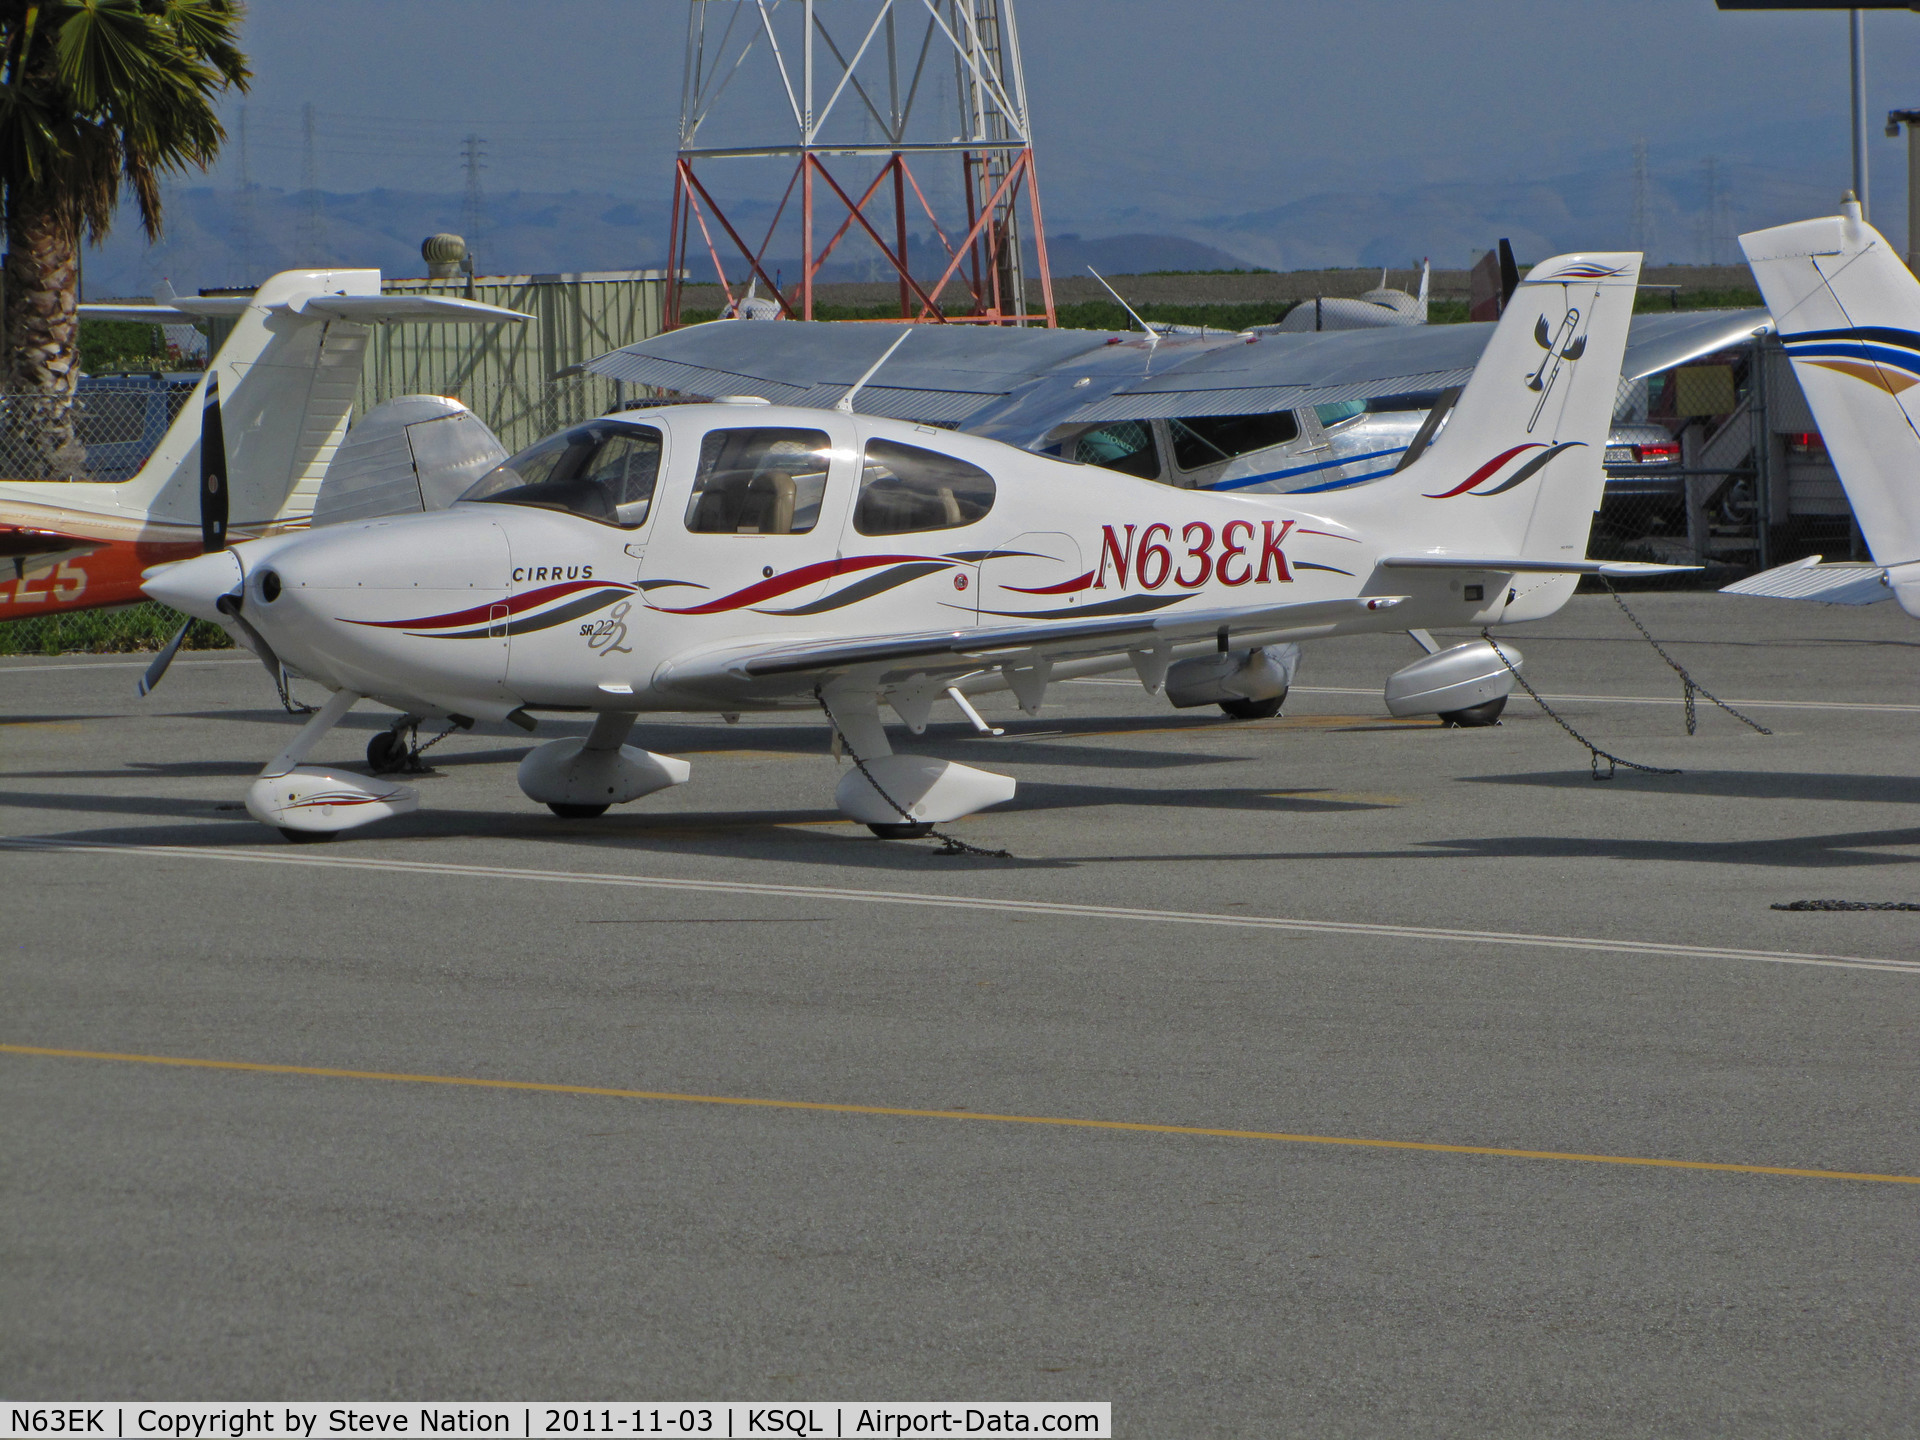 N63EK, 2004 Cirrus SR22 C/N 1095, Big George Aviation (Stateline, NV) 2004 Cirrus Design SR22 with flying trombone logo on tail (port side only) at San Carlos, CA